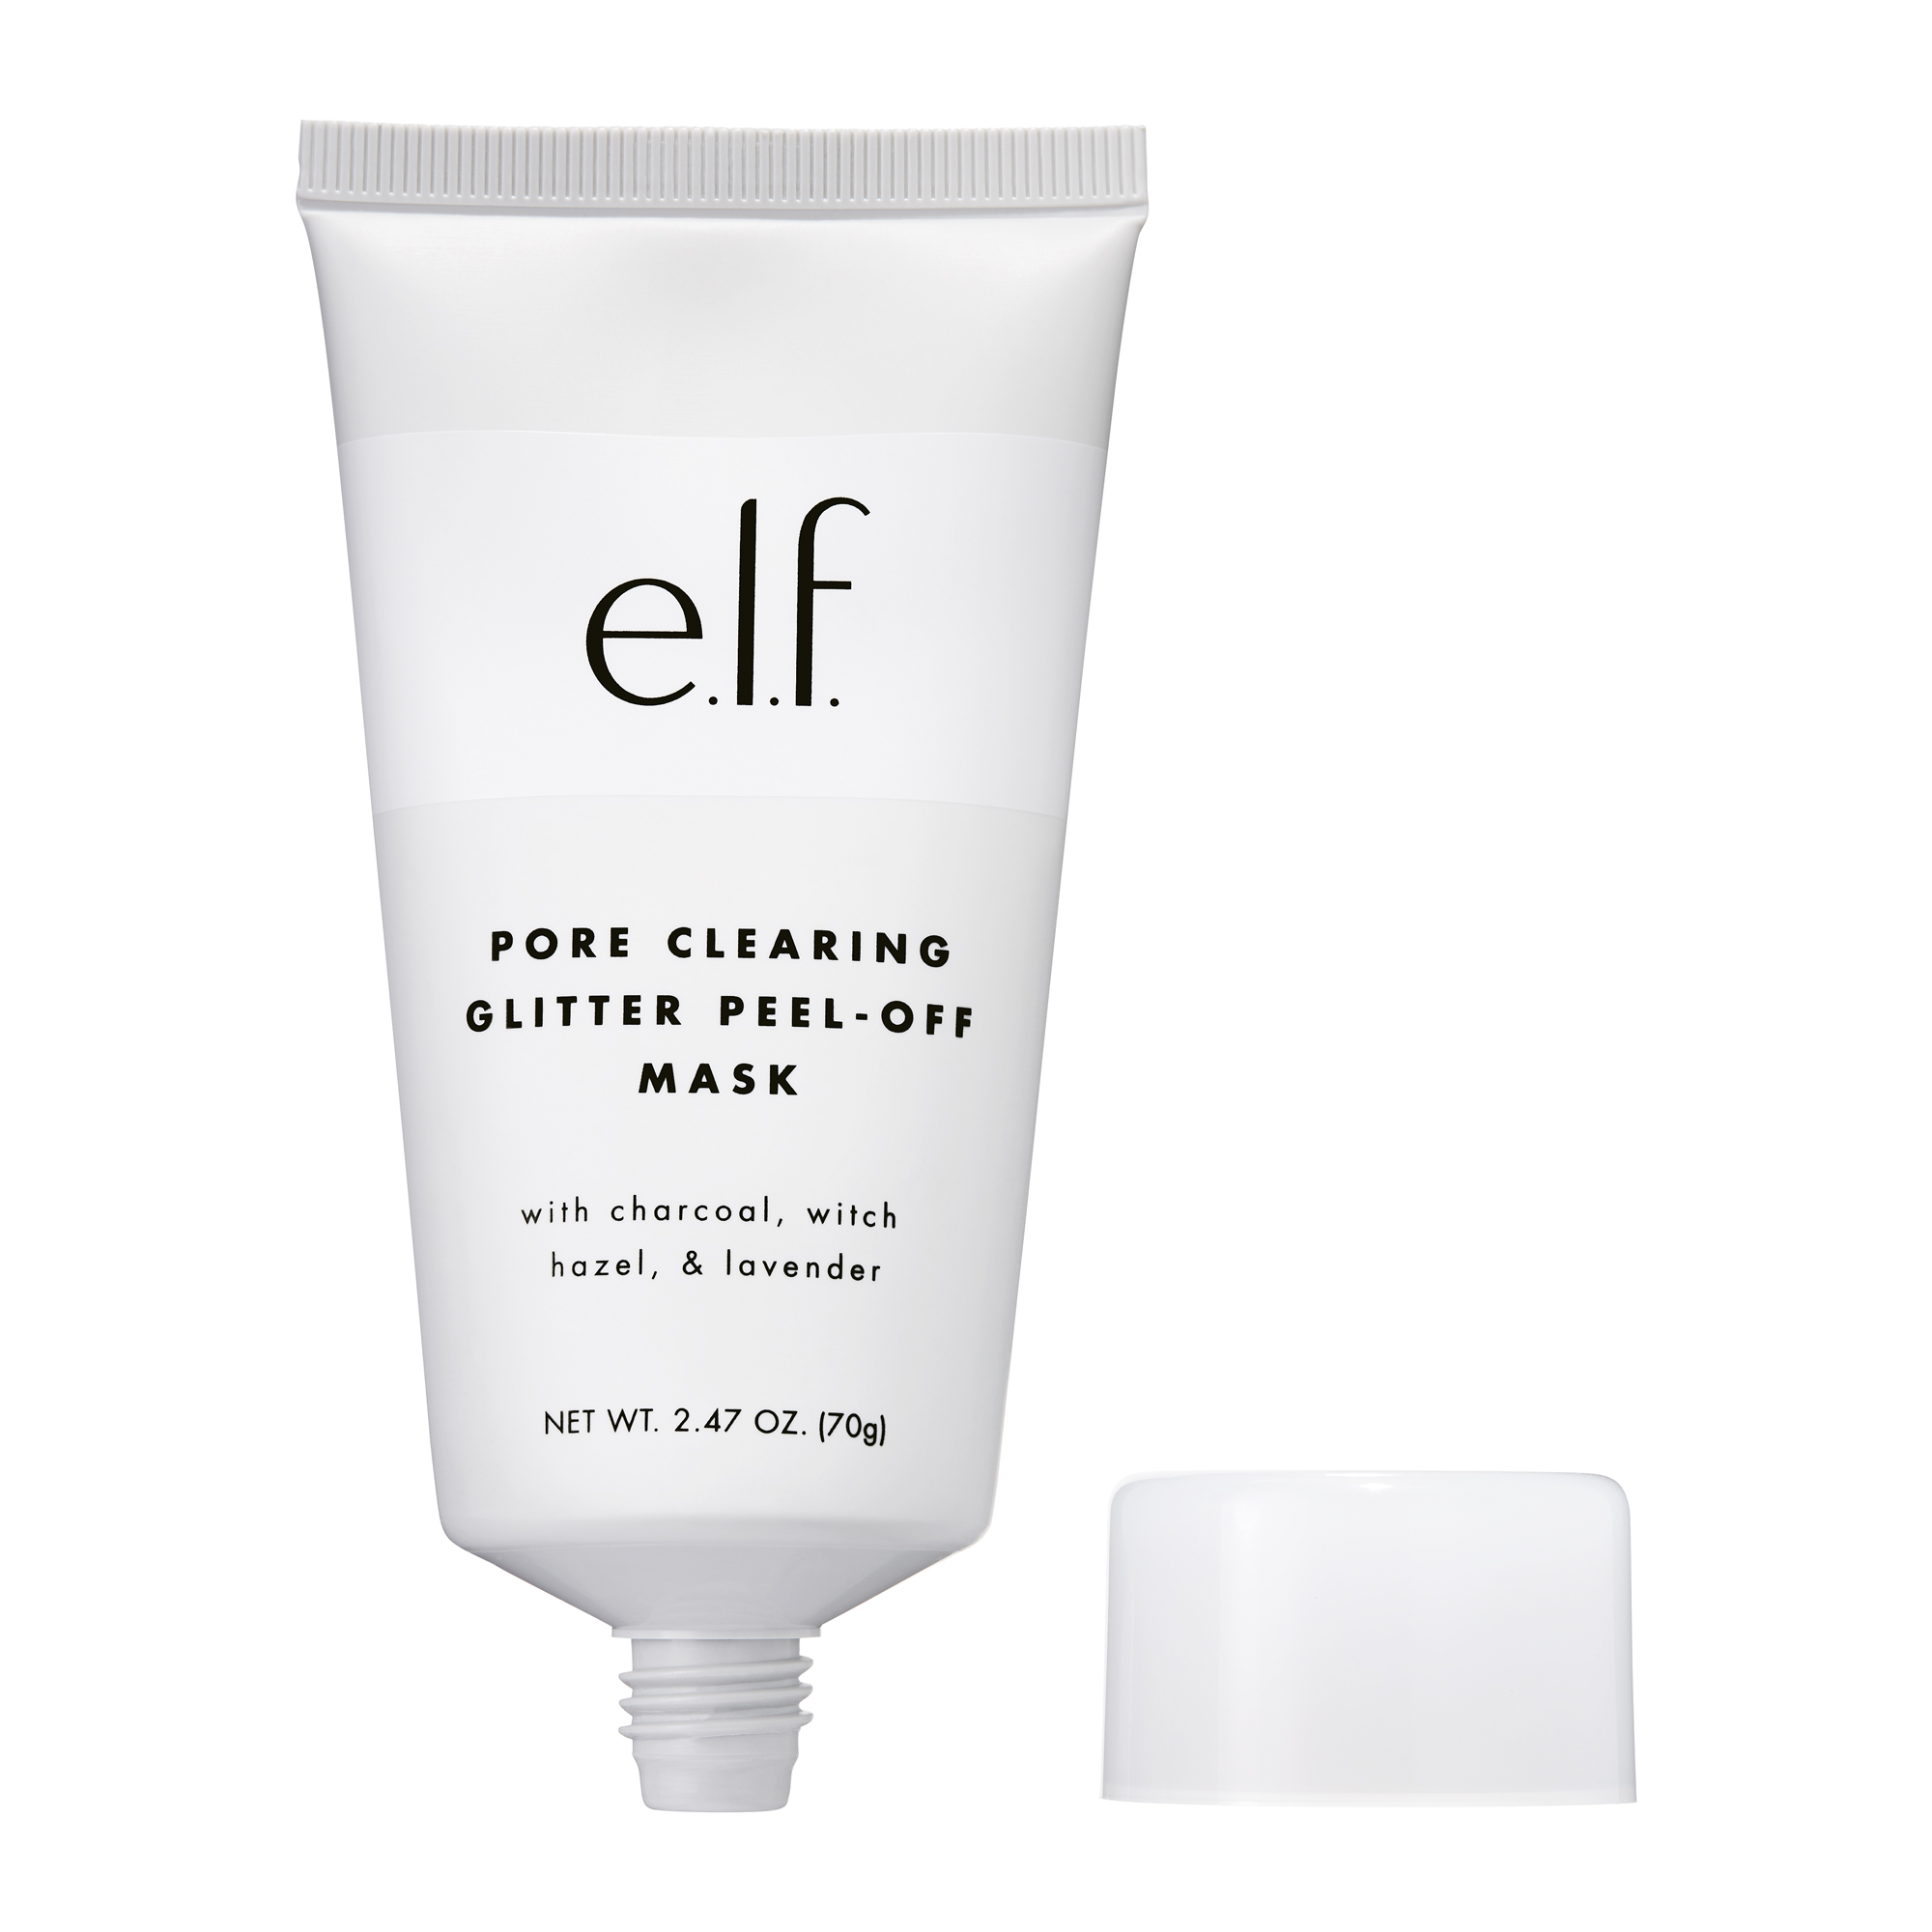 e.l.f. Pore Clearing Glitter Peel Off Mask - image 1 of 3